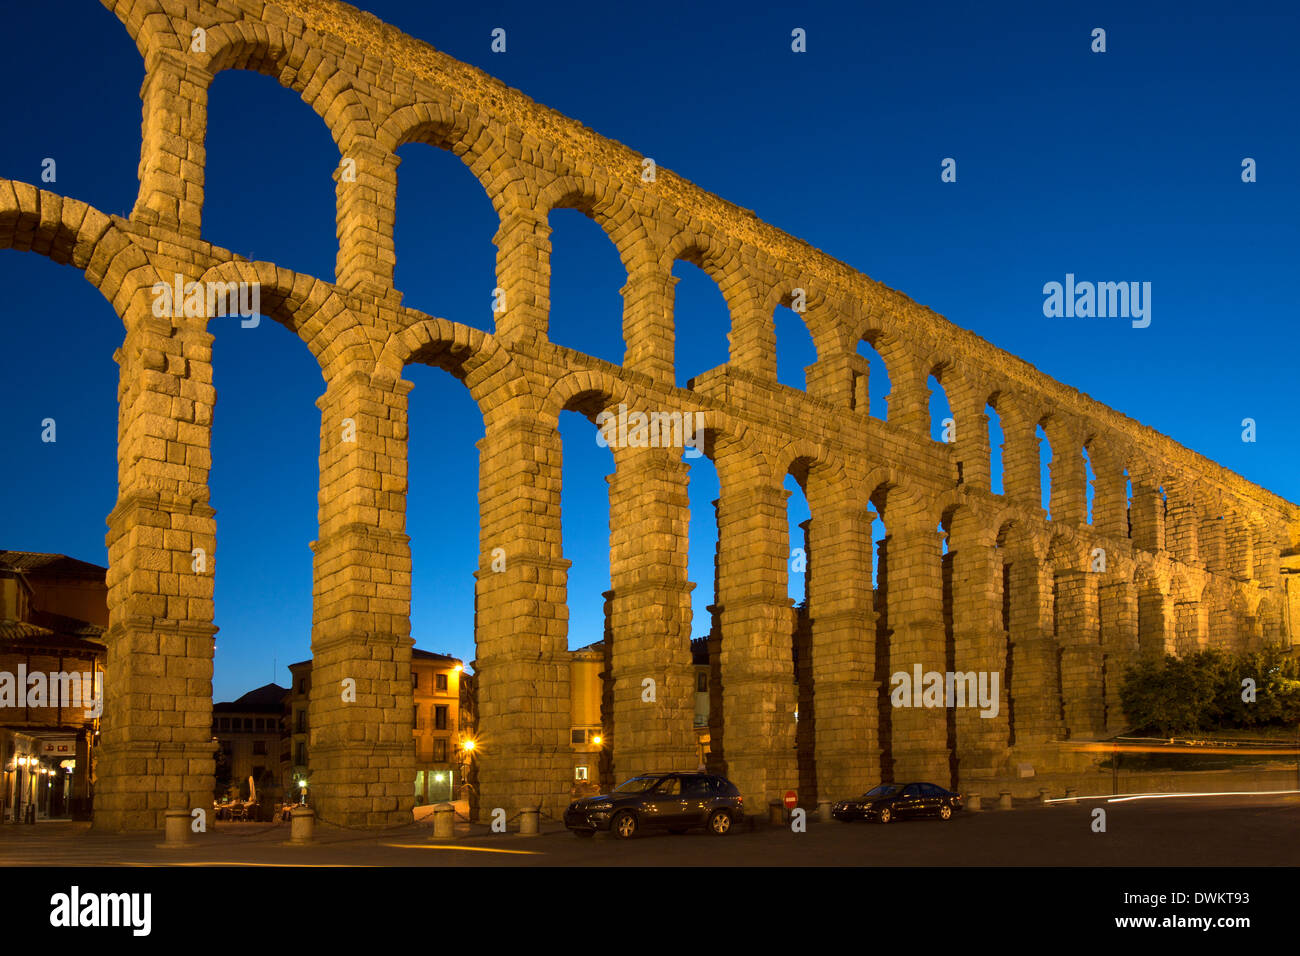 The Roman Aqueduct in the city of Segovia in the Castilla-y-Leon region of central Spain. Stock Photo